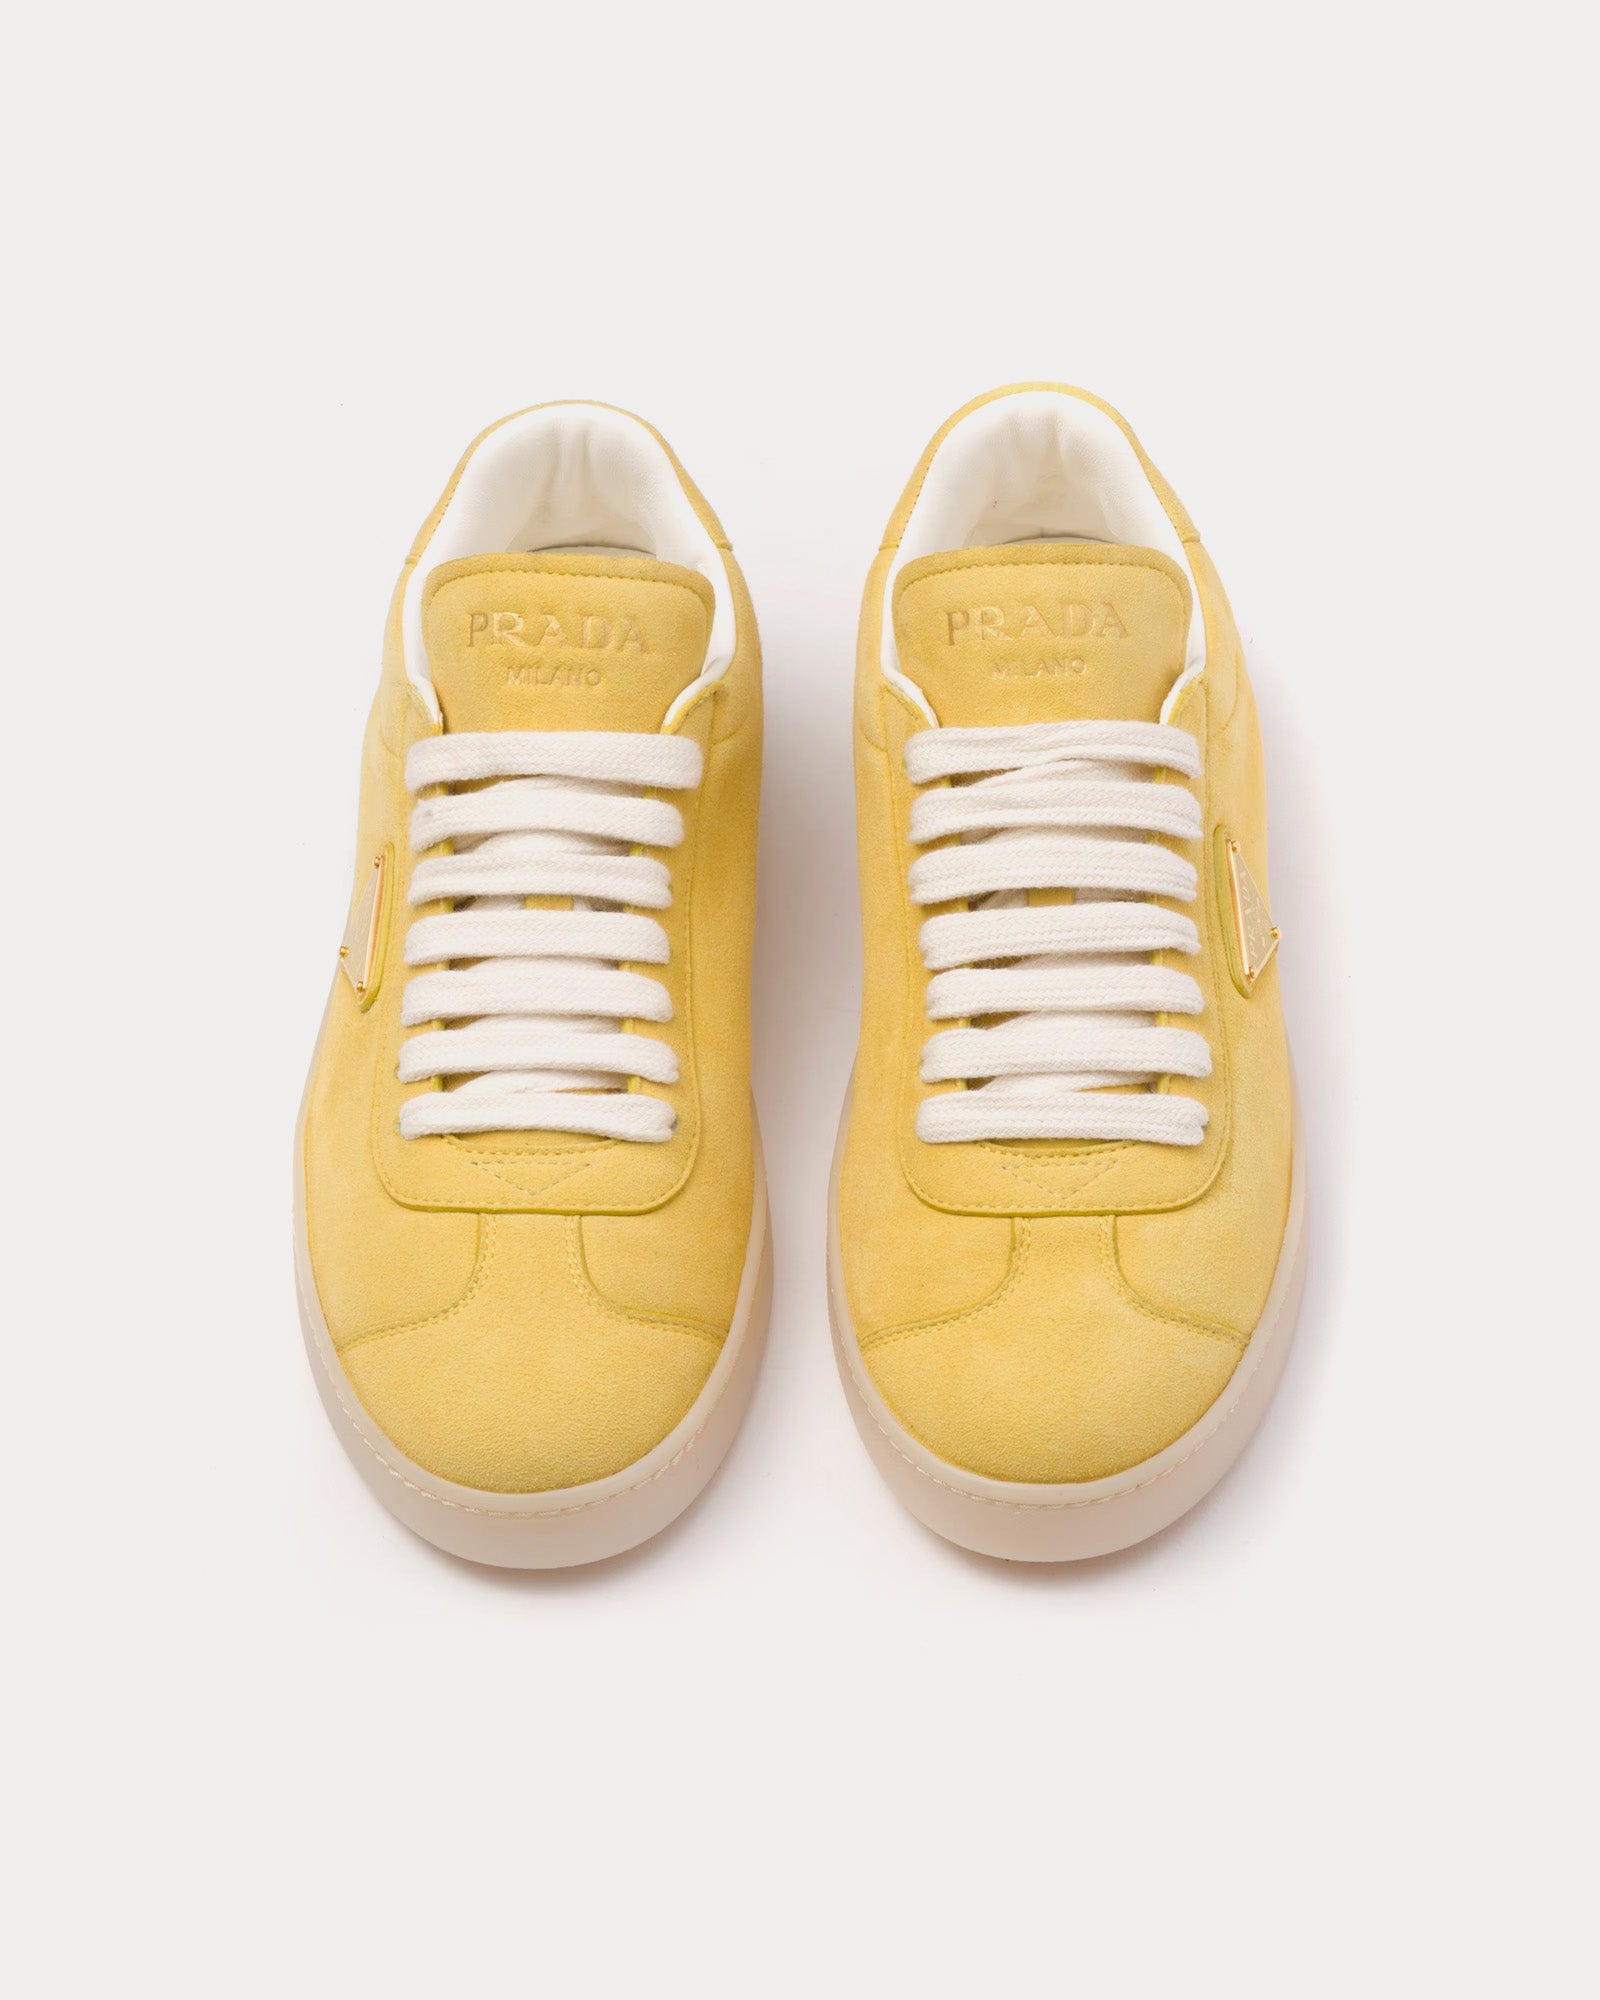 Prada - Lane Suede Sunny Yellow Low Top Sneakers